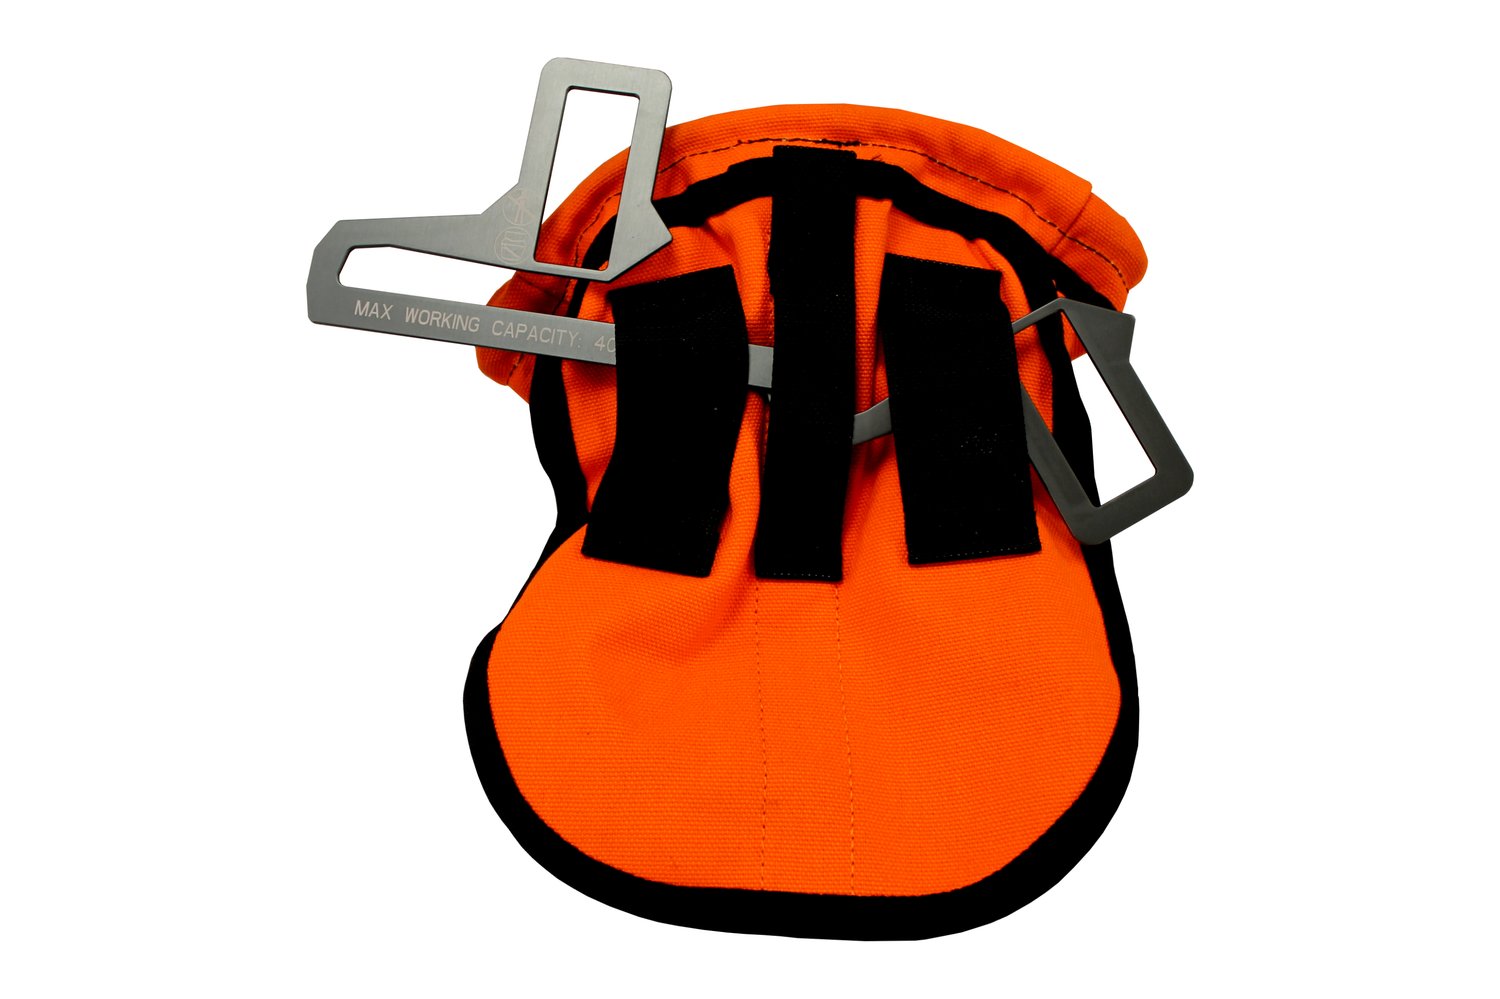 7100310706 - 3M DBI-SALA ExoFit STRATA Tool Bag Hanger for Harness 9512724, 40 lb
Capacity